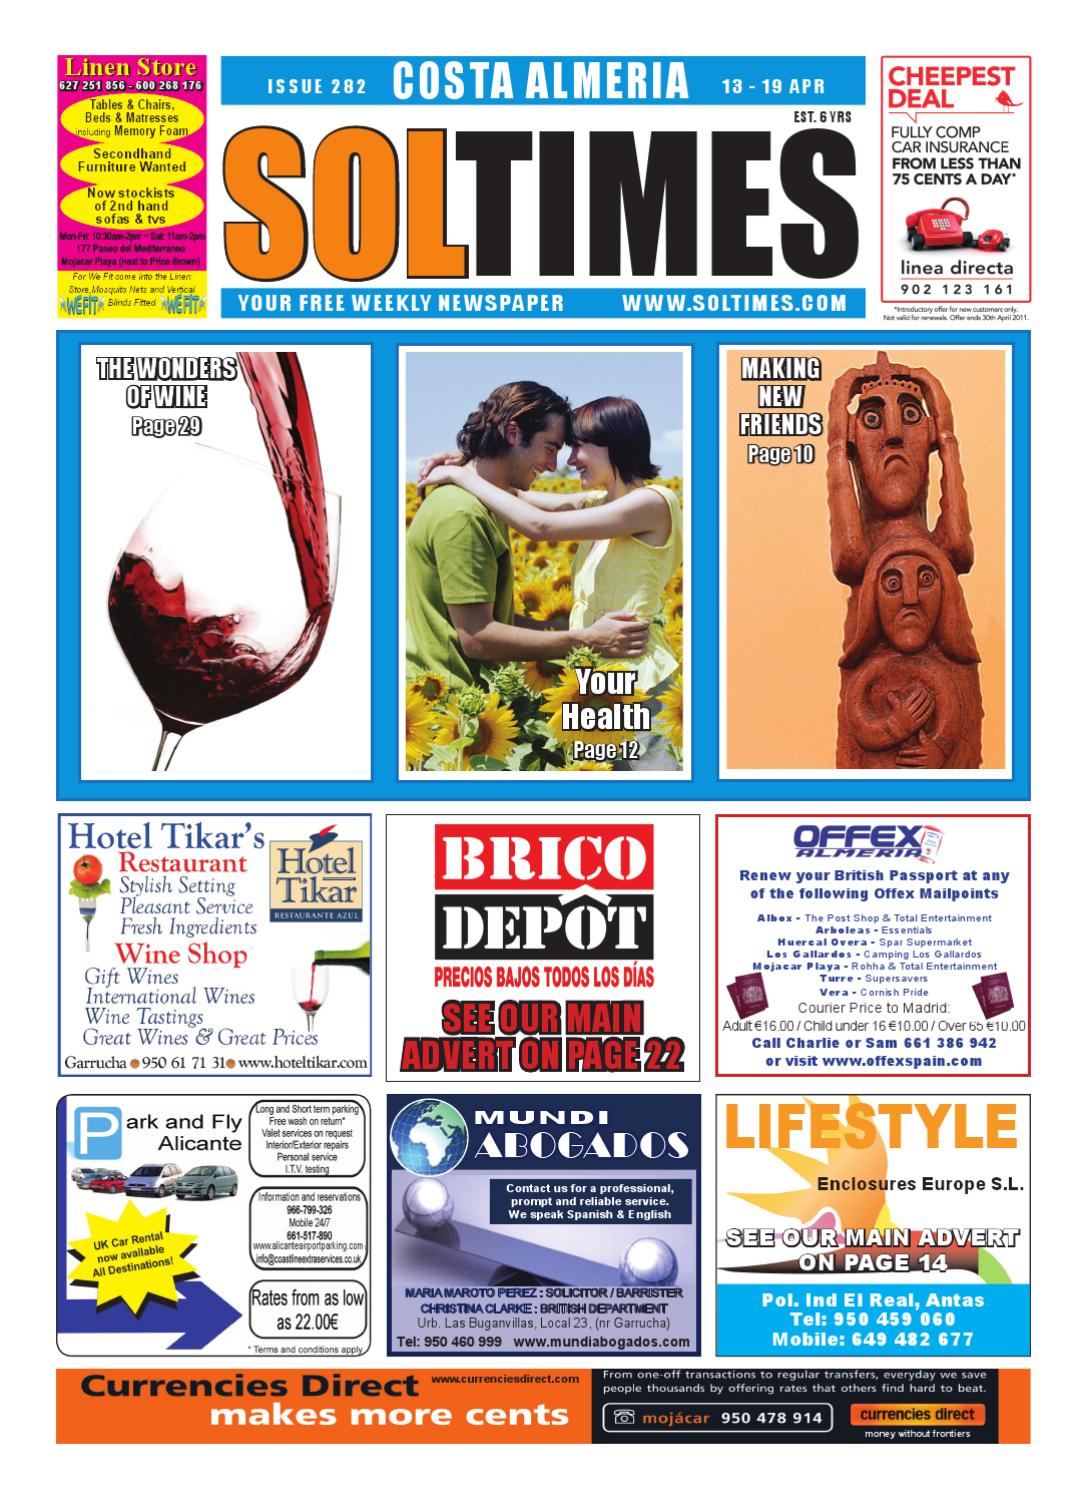 Bricodepot Paris Luxe sol Times Newspaper issue 282 Costa Almeria Edition by Nigel